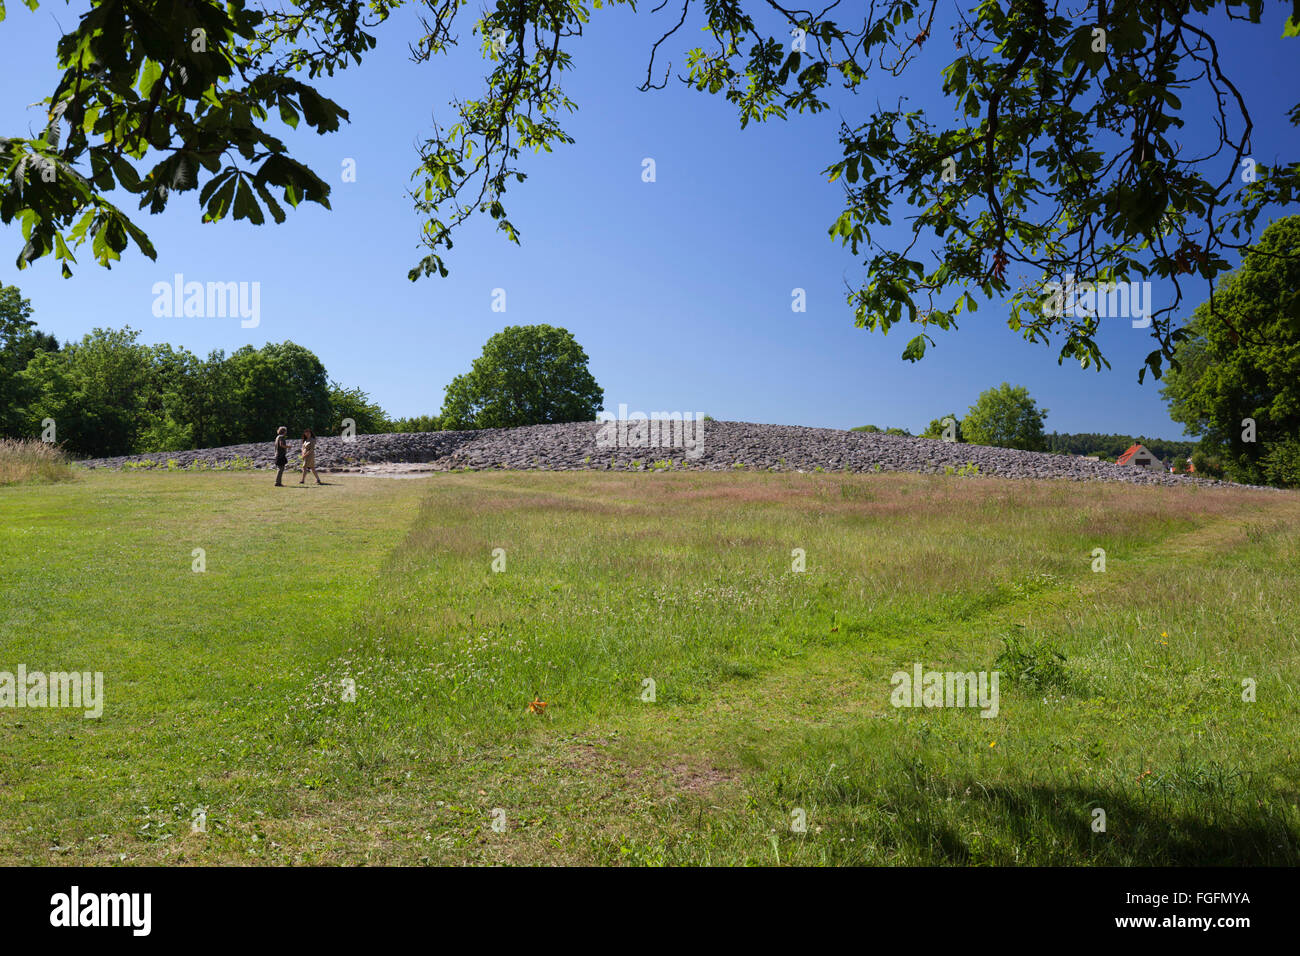 Kiviksgraven Età del Bronzo tomba, Kivik, Skane, sud della Svezia, Svezia, Scandinavia, Europa Foto Stock